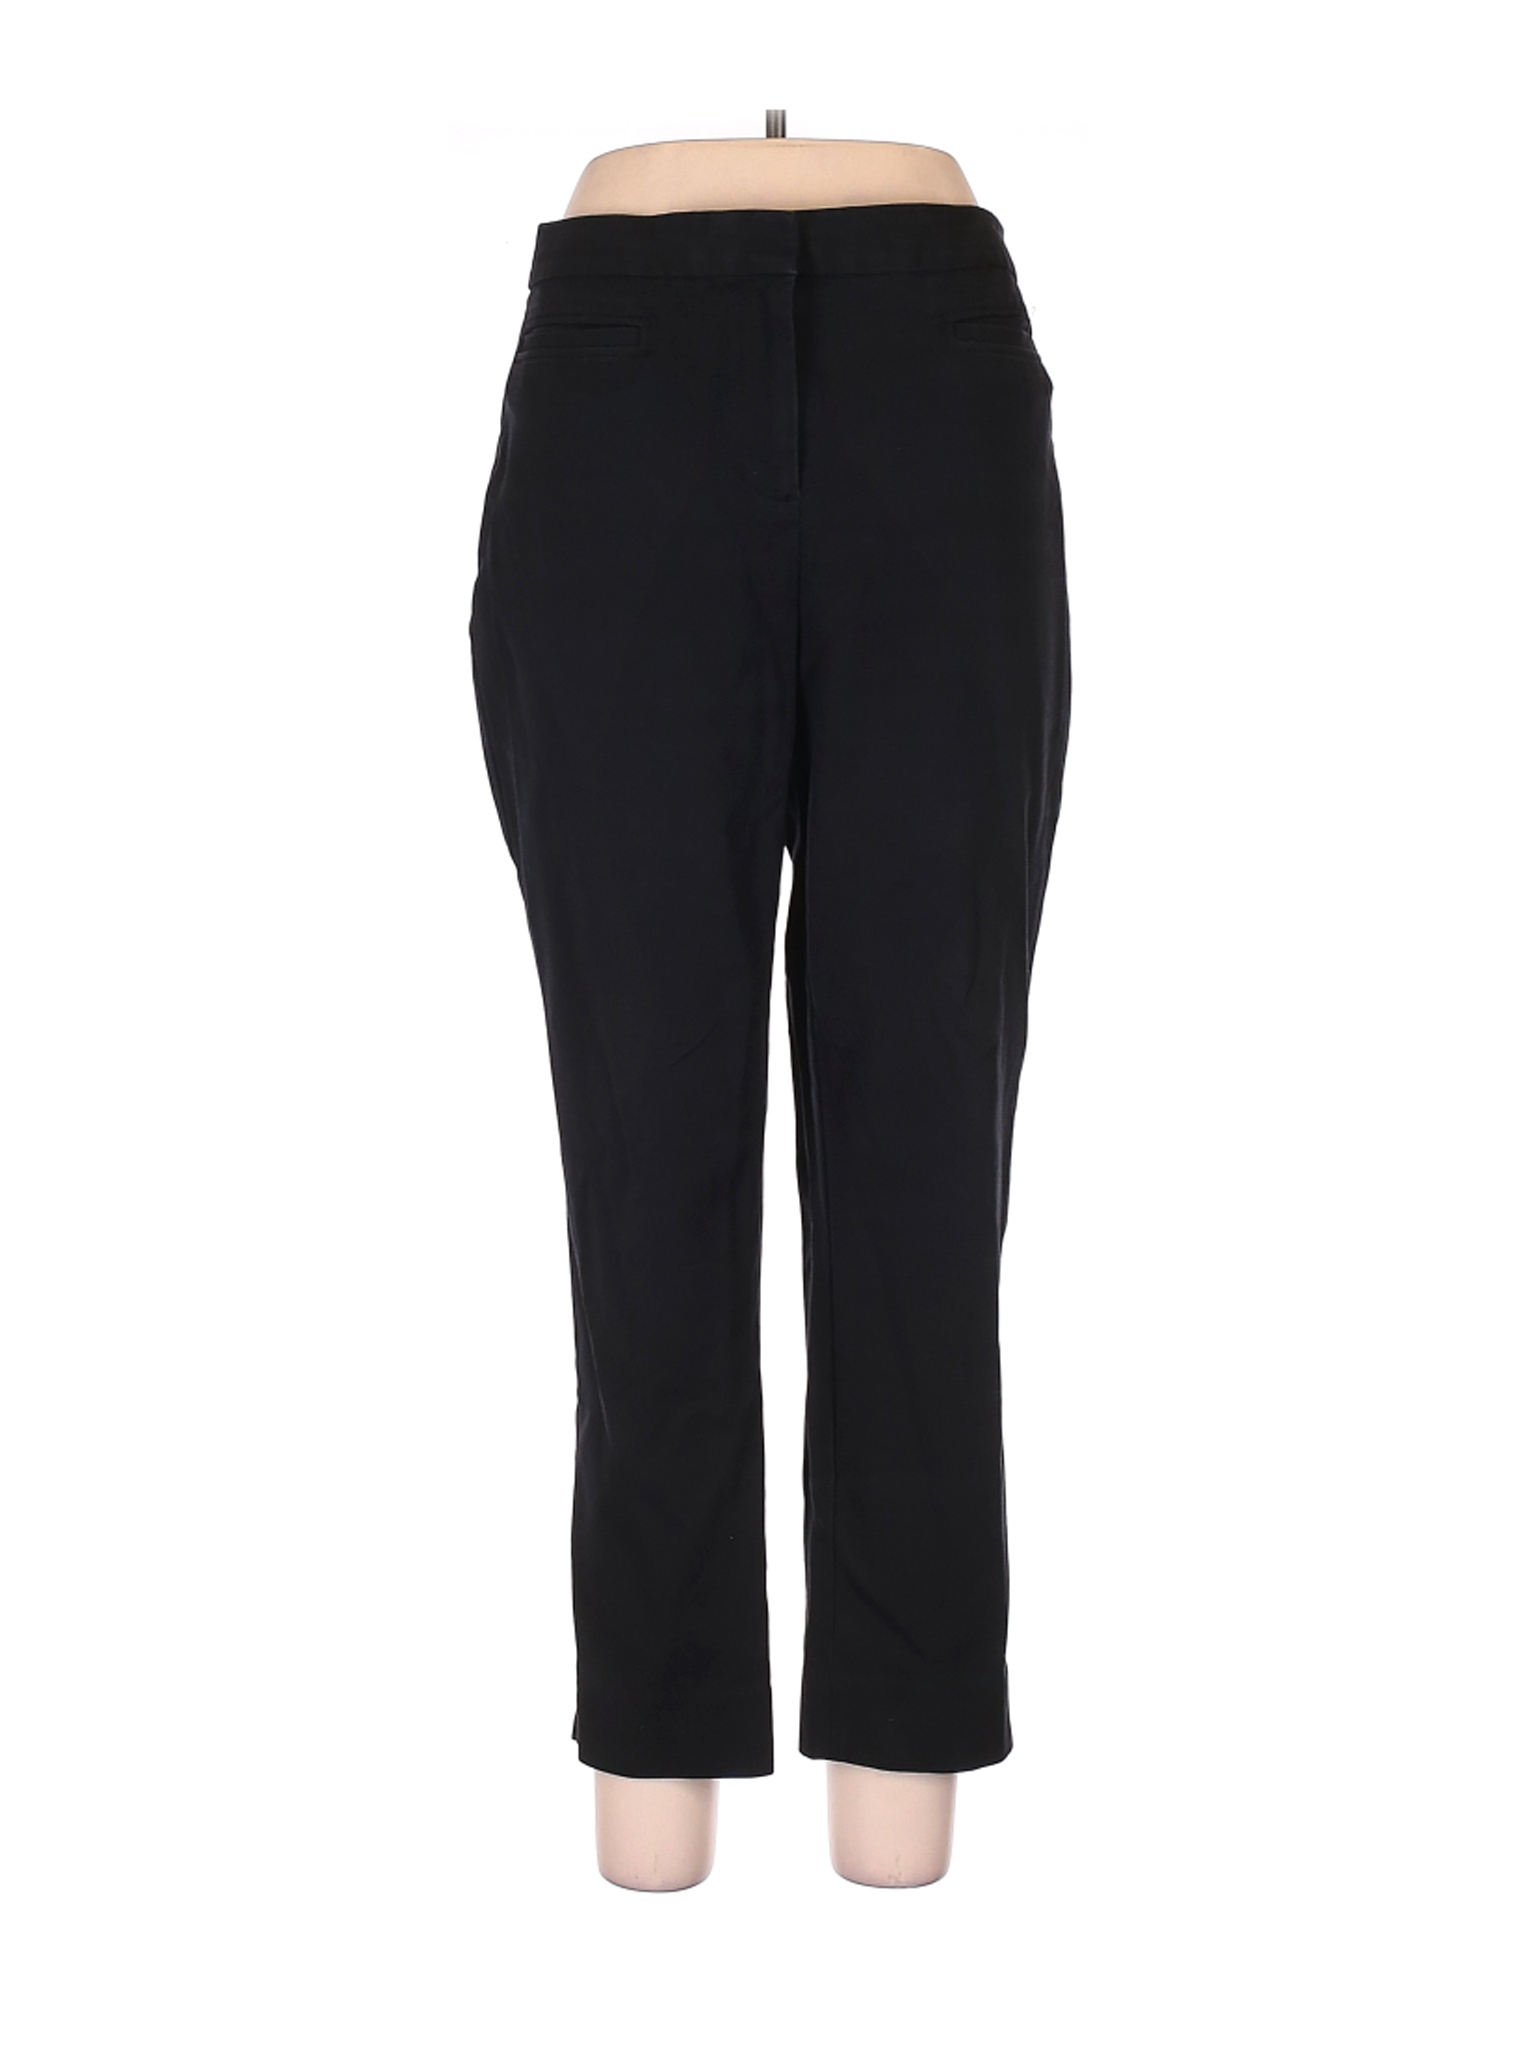 Talbots Women Black Dress Pants 14 | eBay